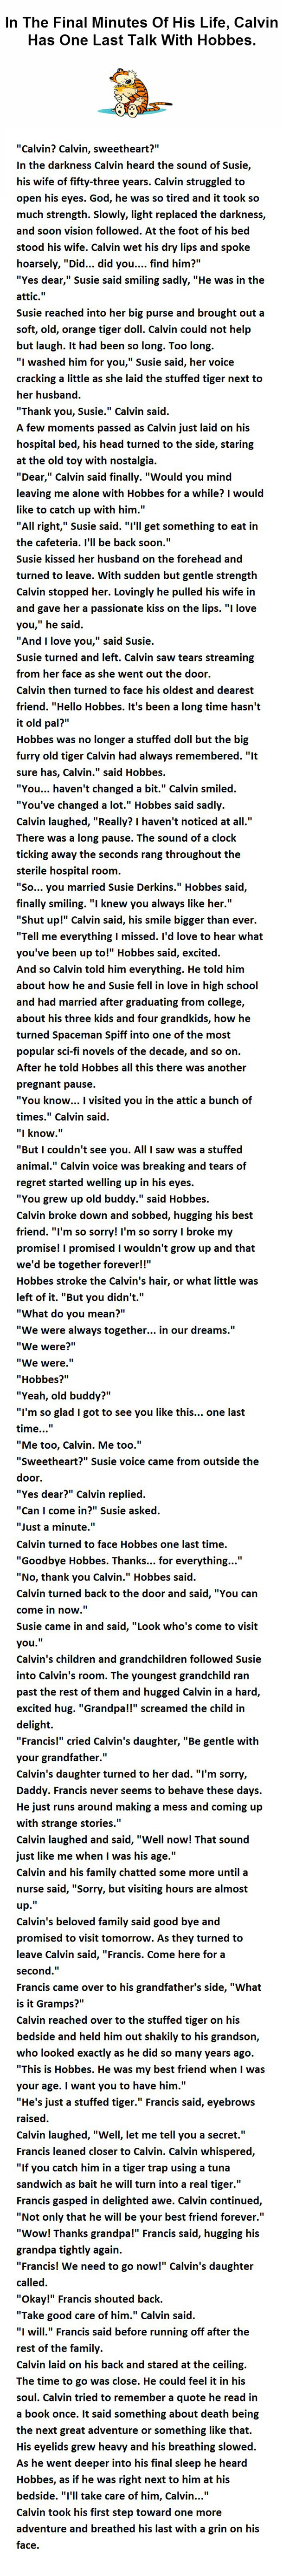 Calvin-and-Hobbes